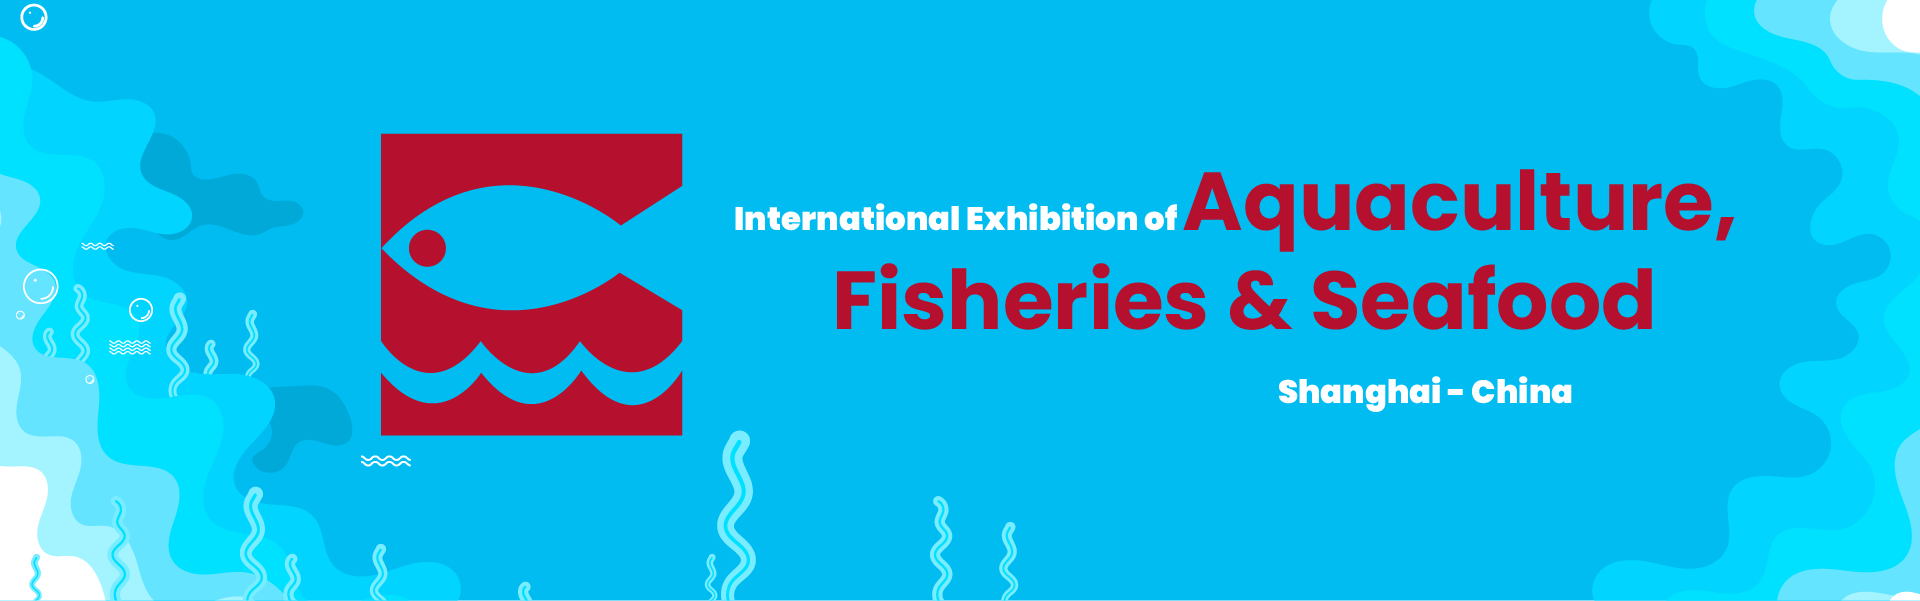 Fishery (World Seafood) Exhibition Shanghai China